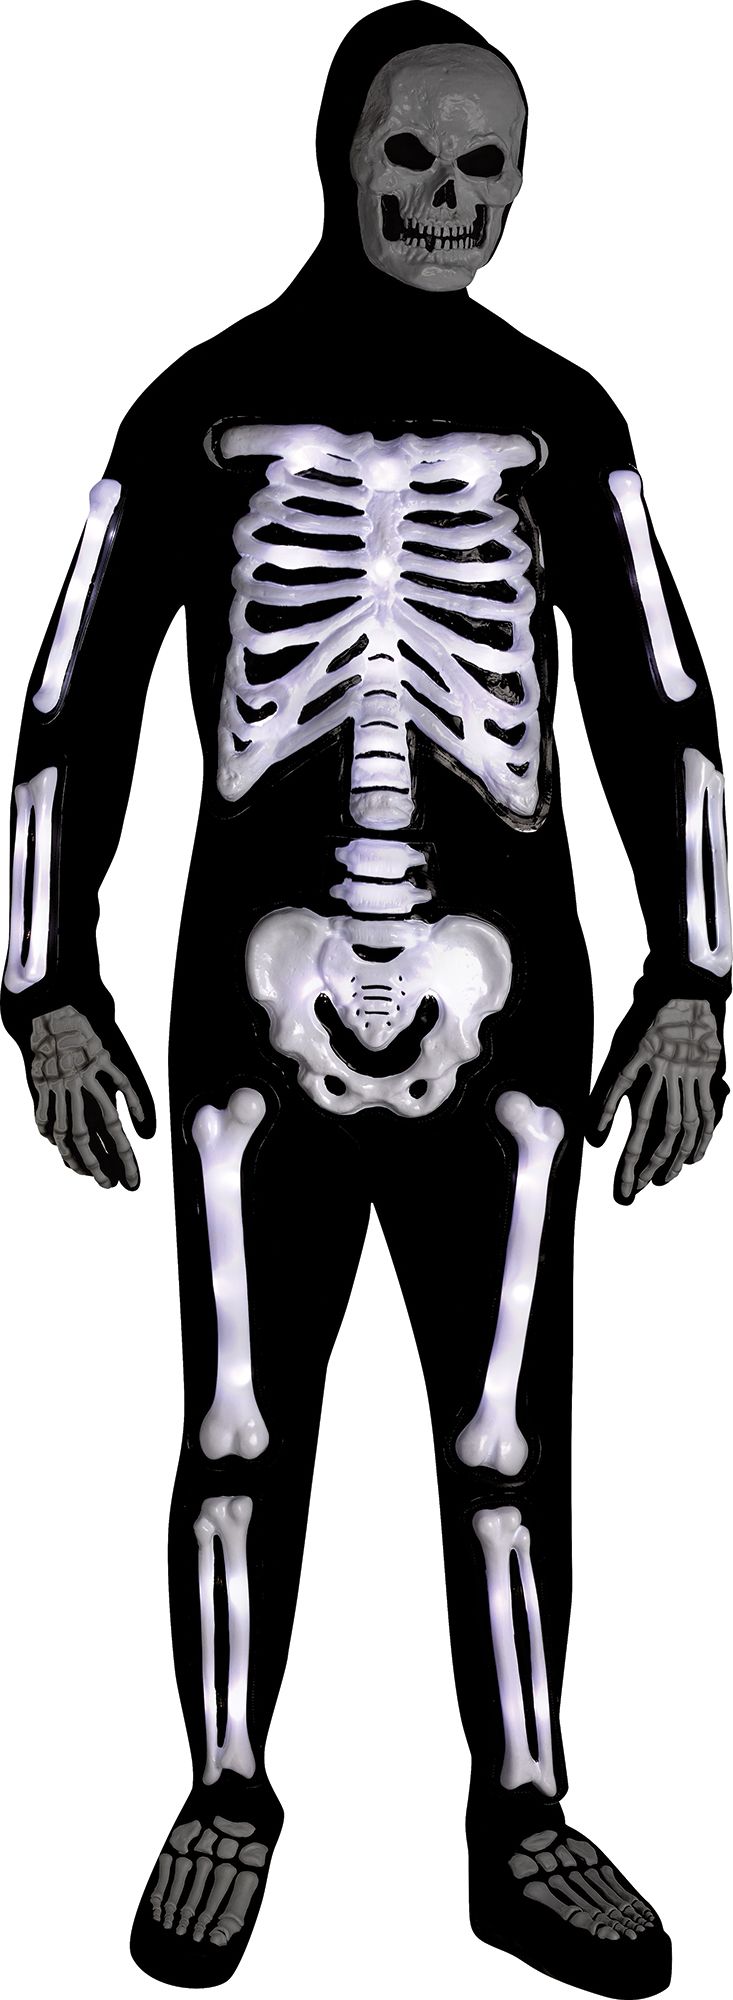 Light Up Skele-Bones Adult Costume